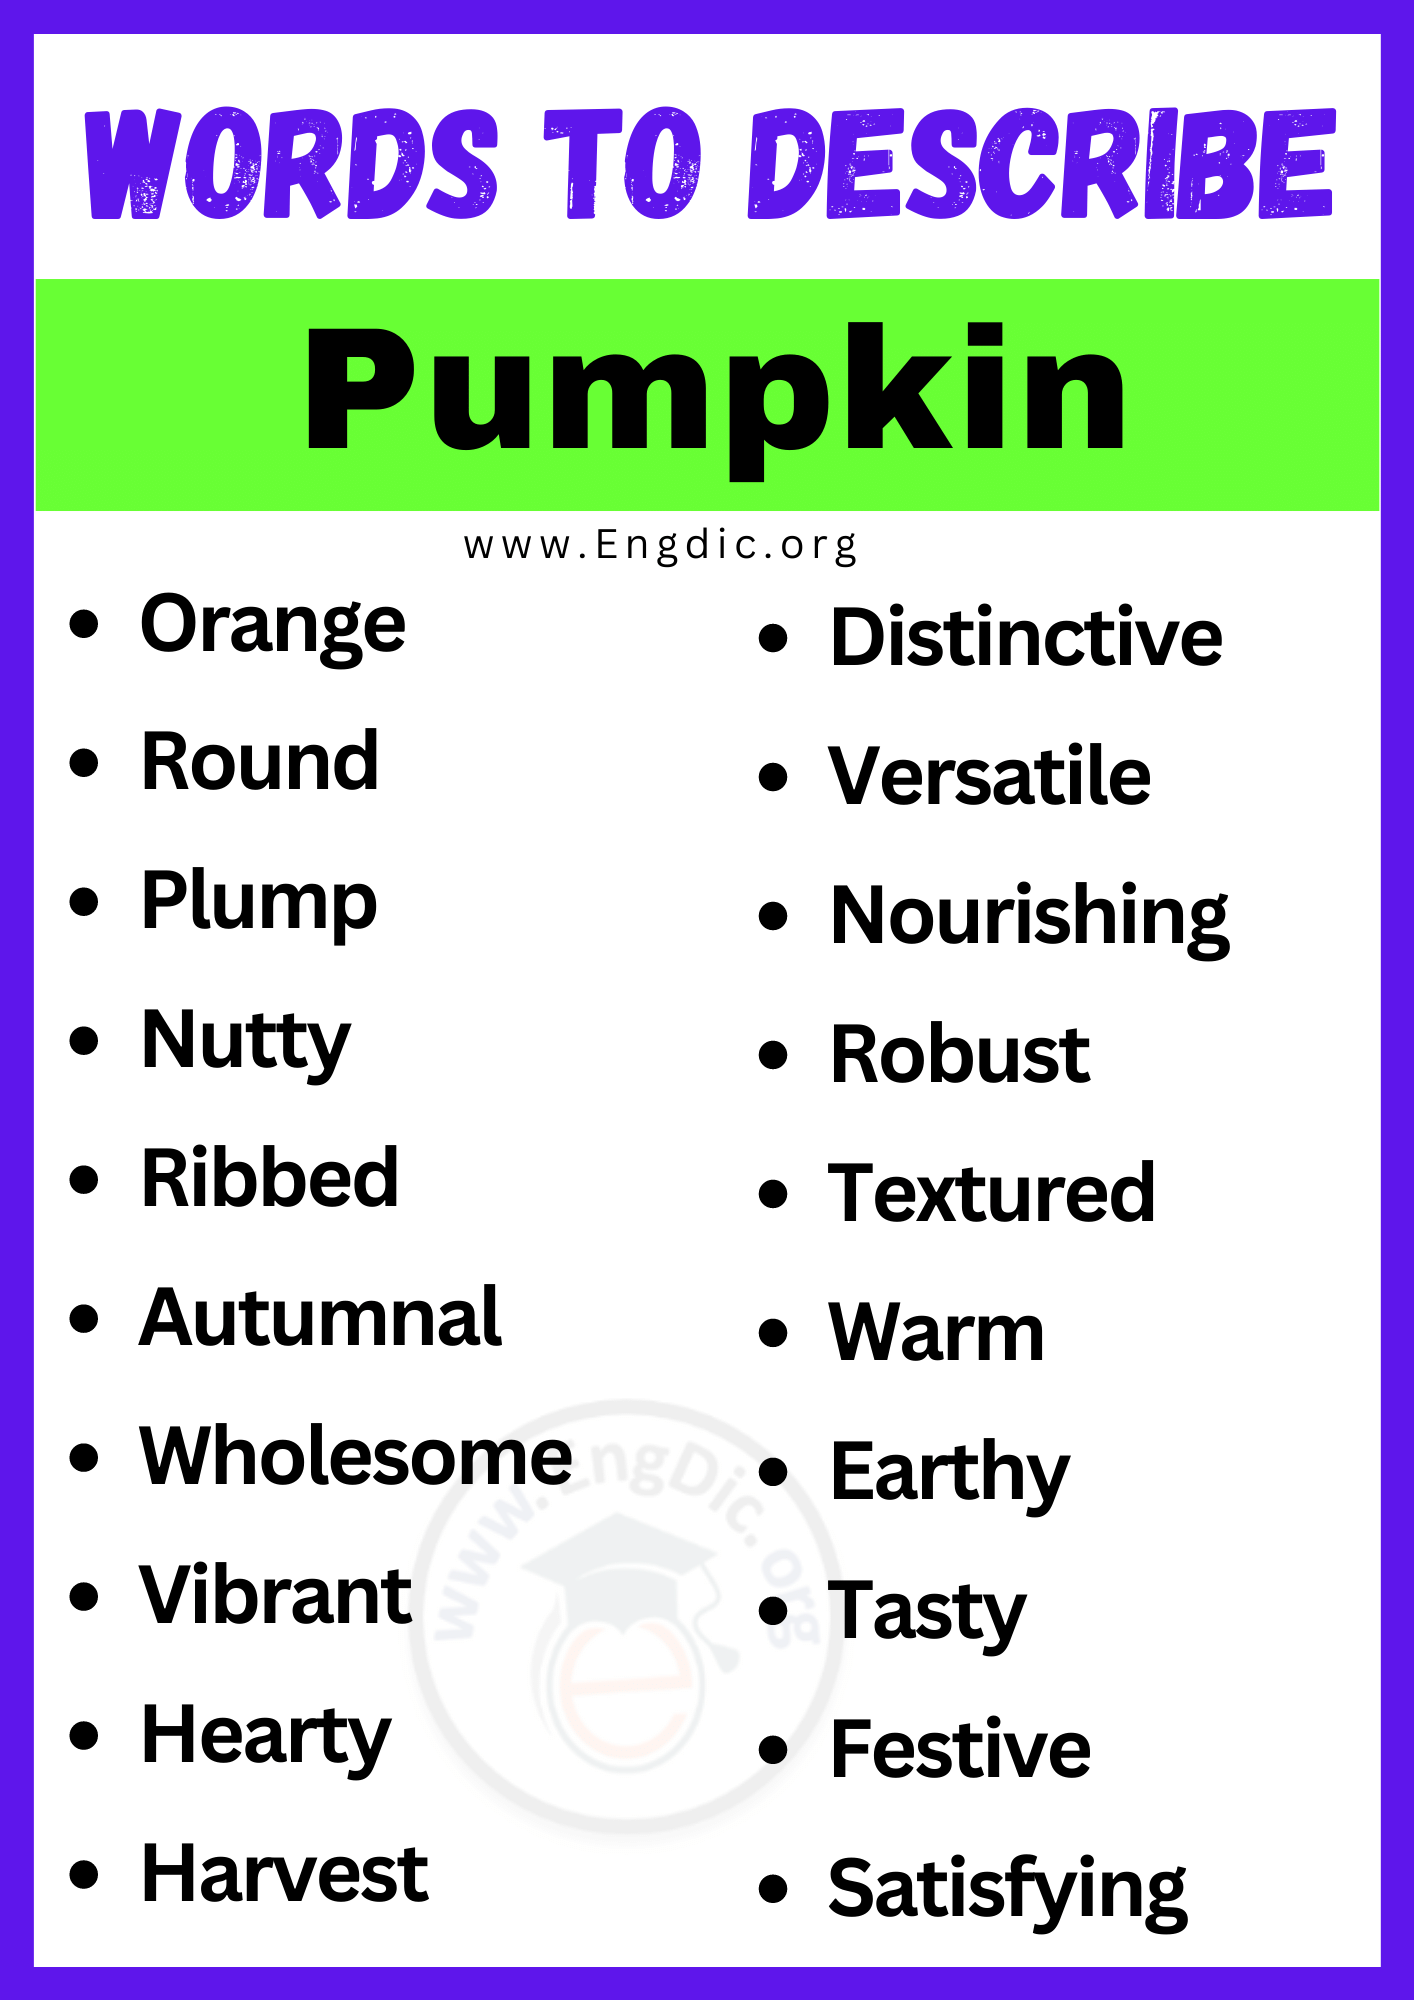 Words to Describe Pumpkin